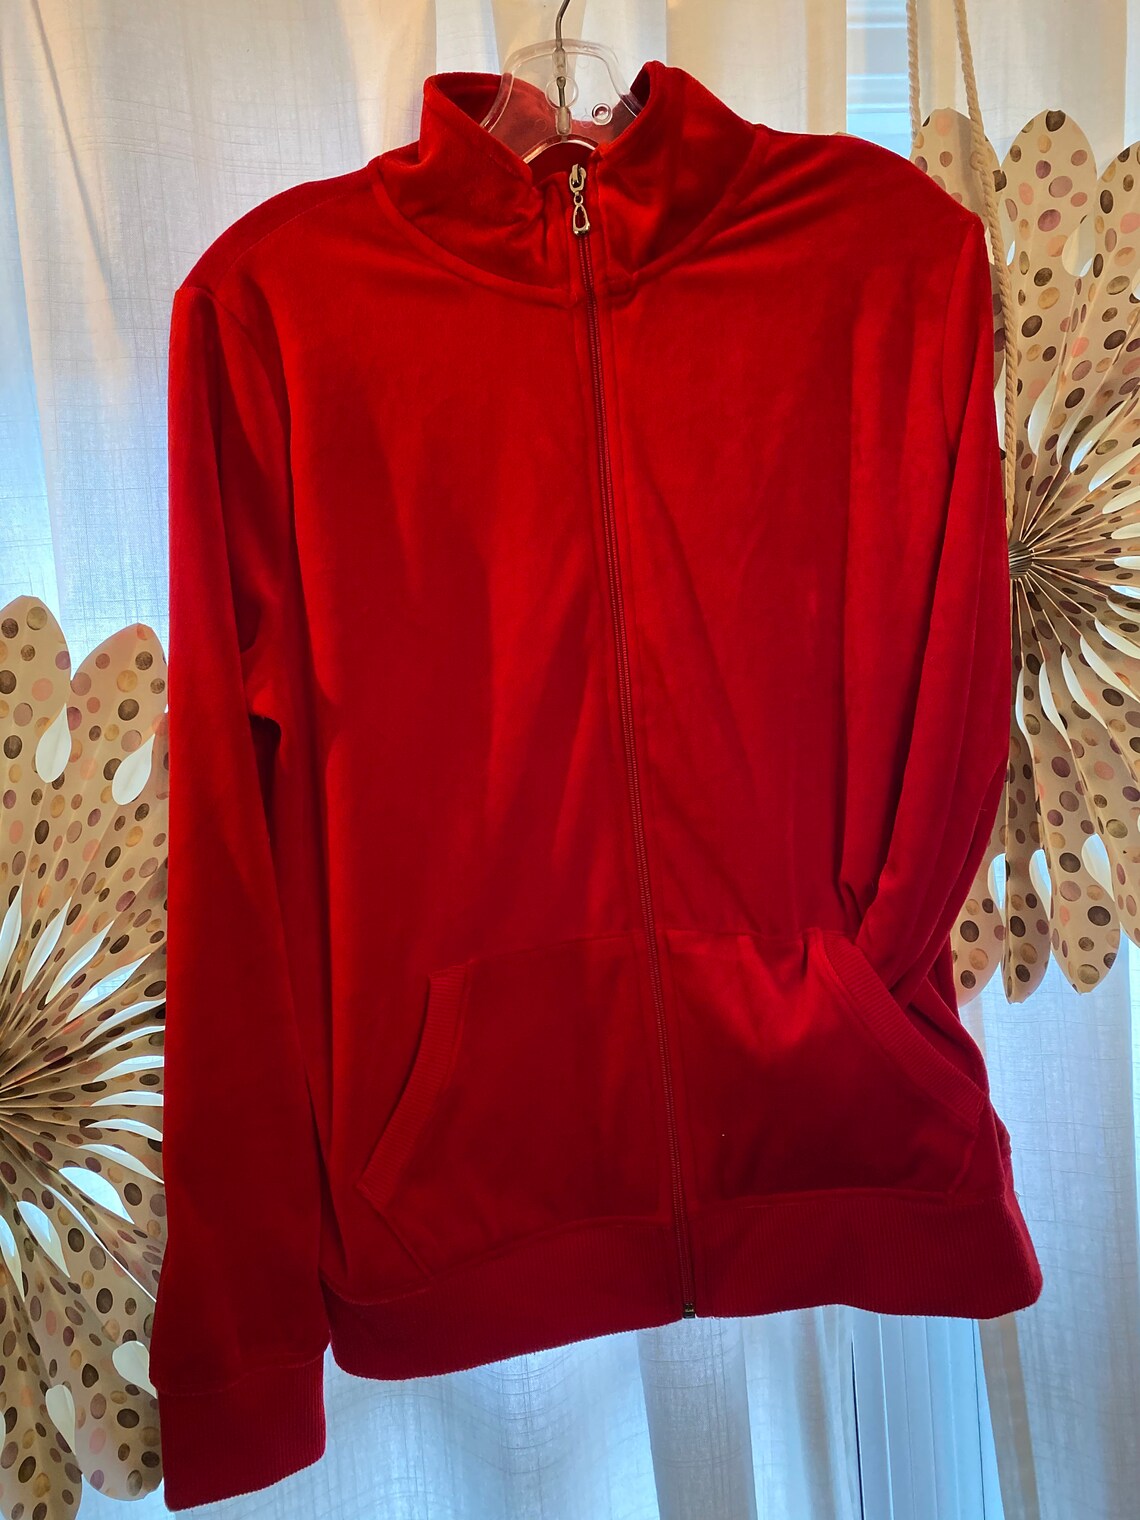 Velvet red zip up sweater size XL velour sweater | Etsy